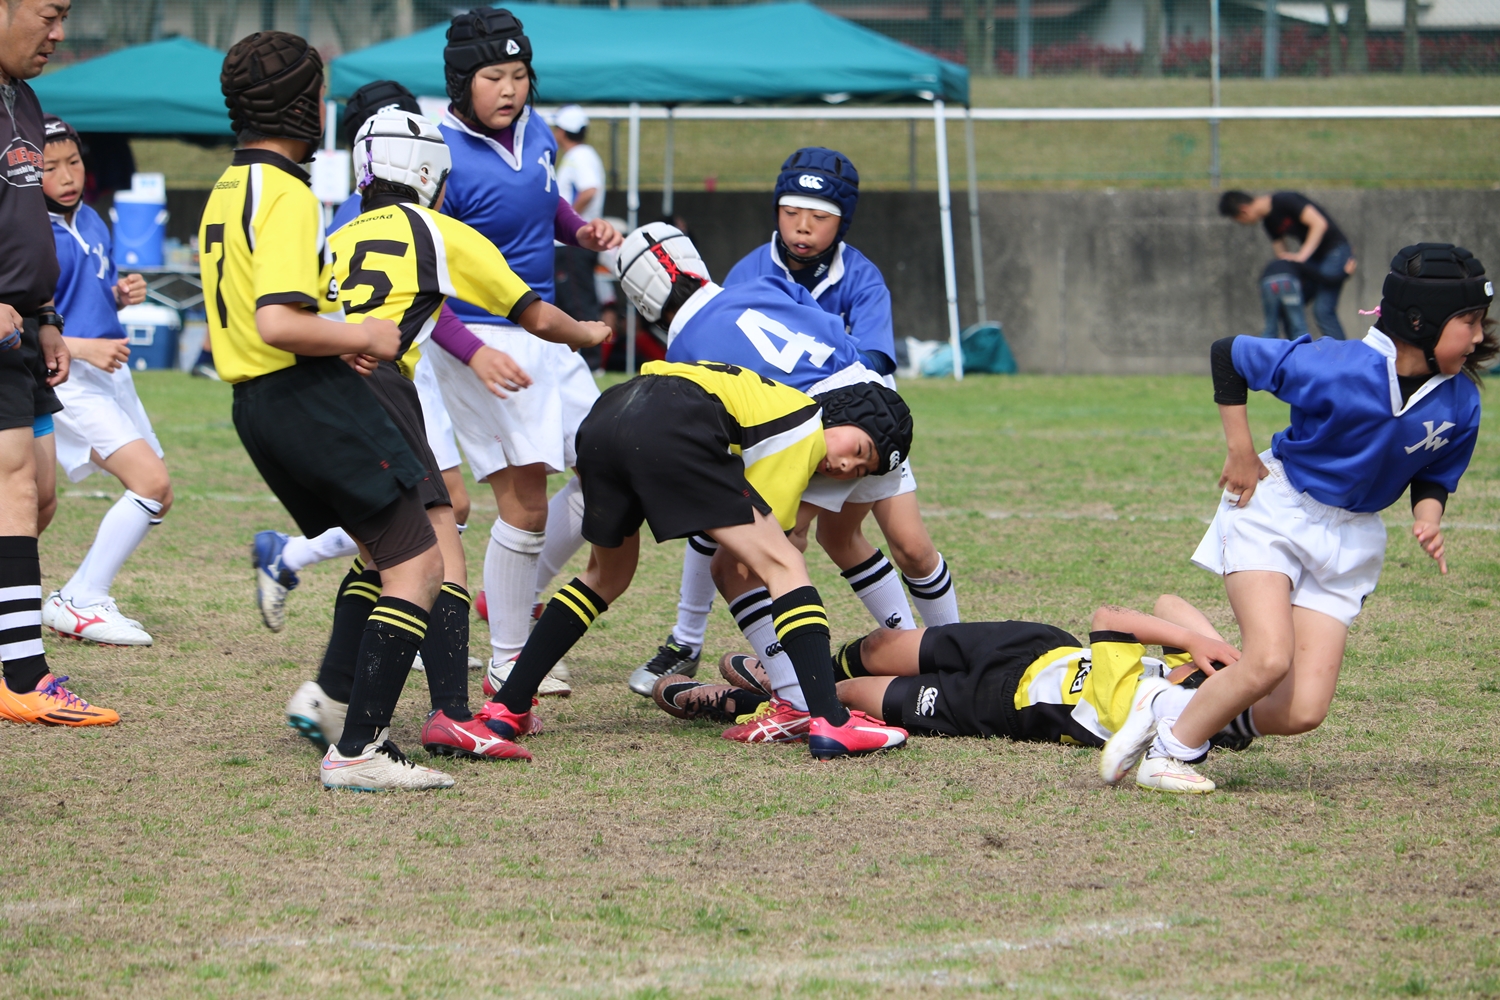 youngwave_kitakyusyu_rugby_school_kasugahai2016086.JPG